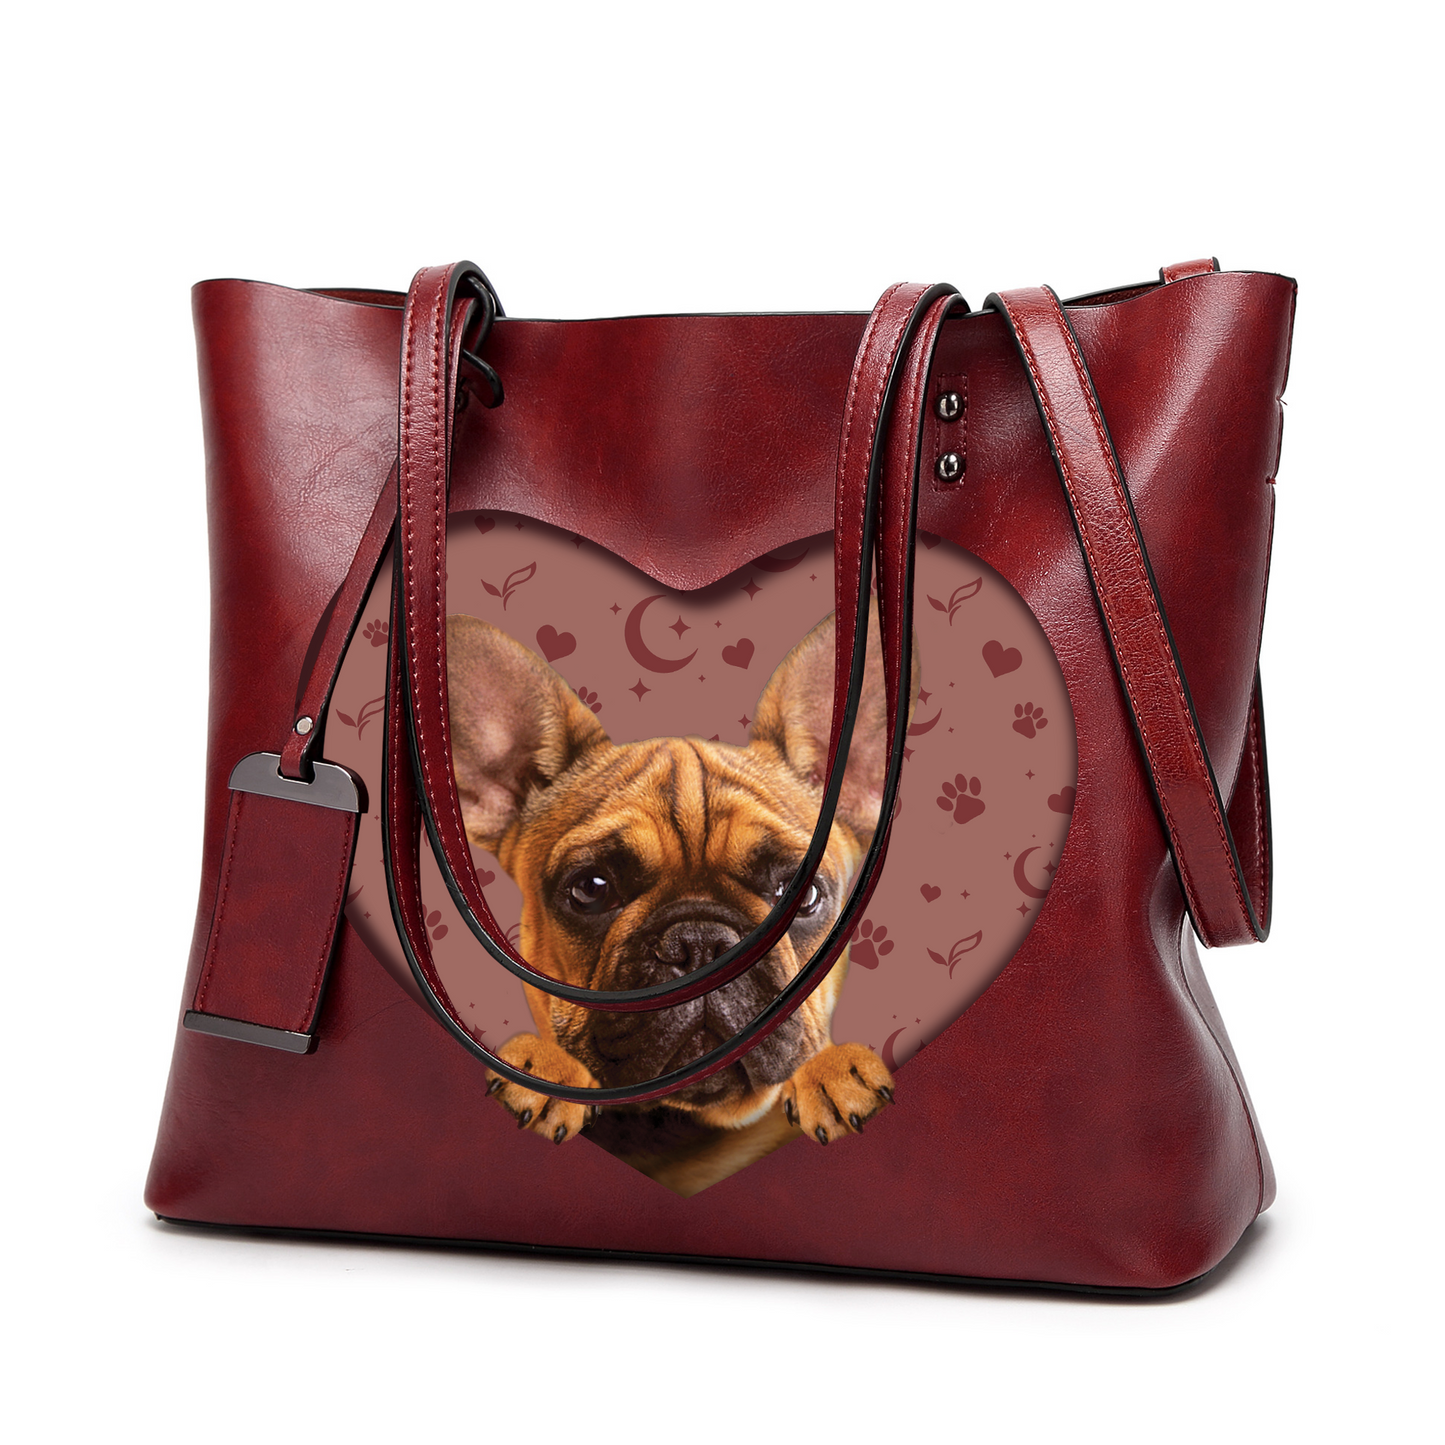 I Know I'm Cute - French Bulldog Glamour Handbag V1 - 7